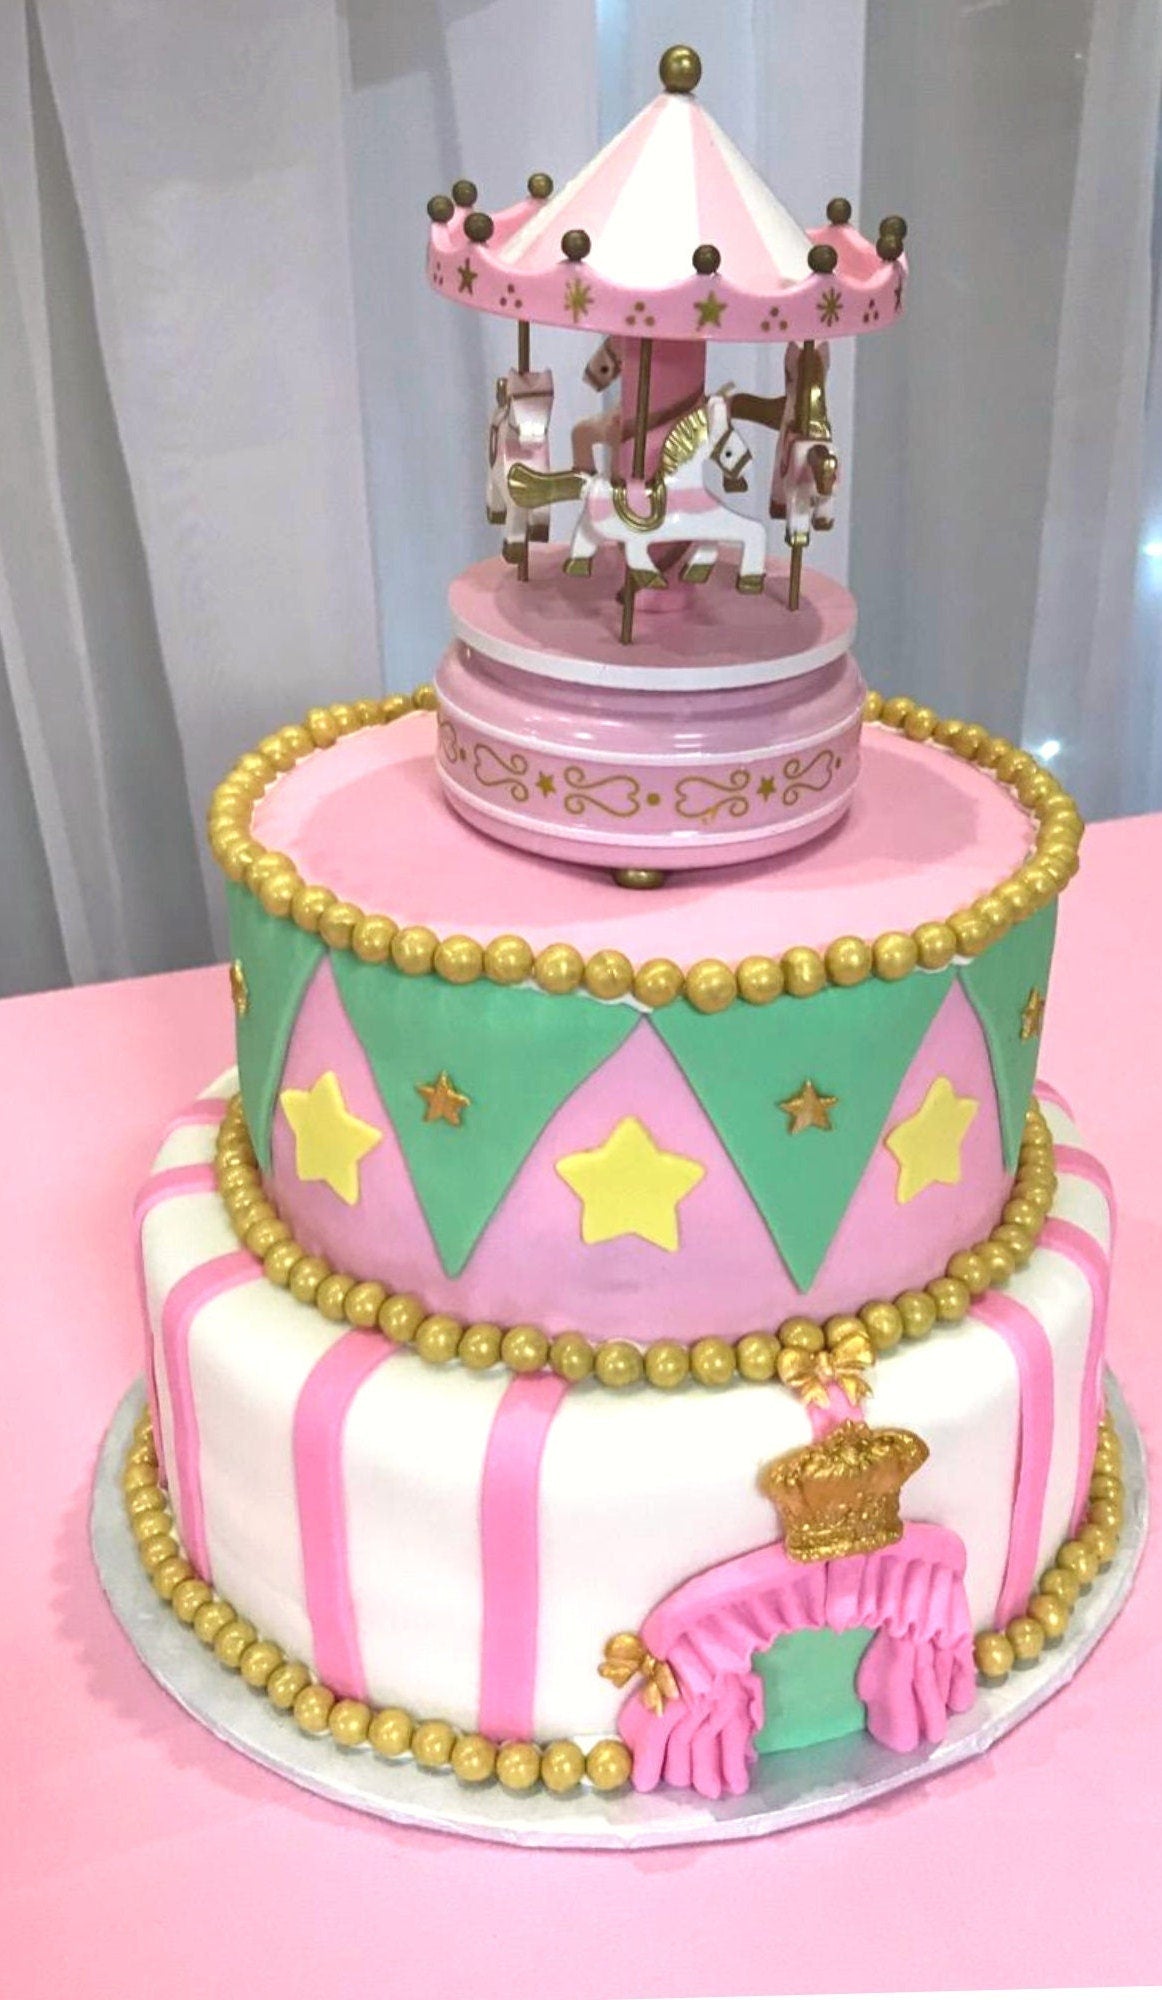 CIRCUS CARNIVAL CLOWN Birthday Party Image Edible Cake topper | eBay